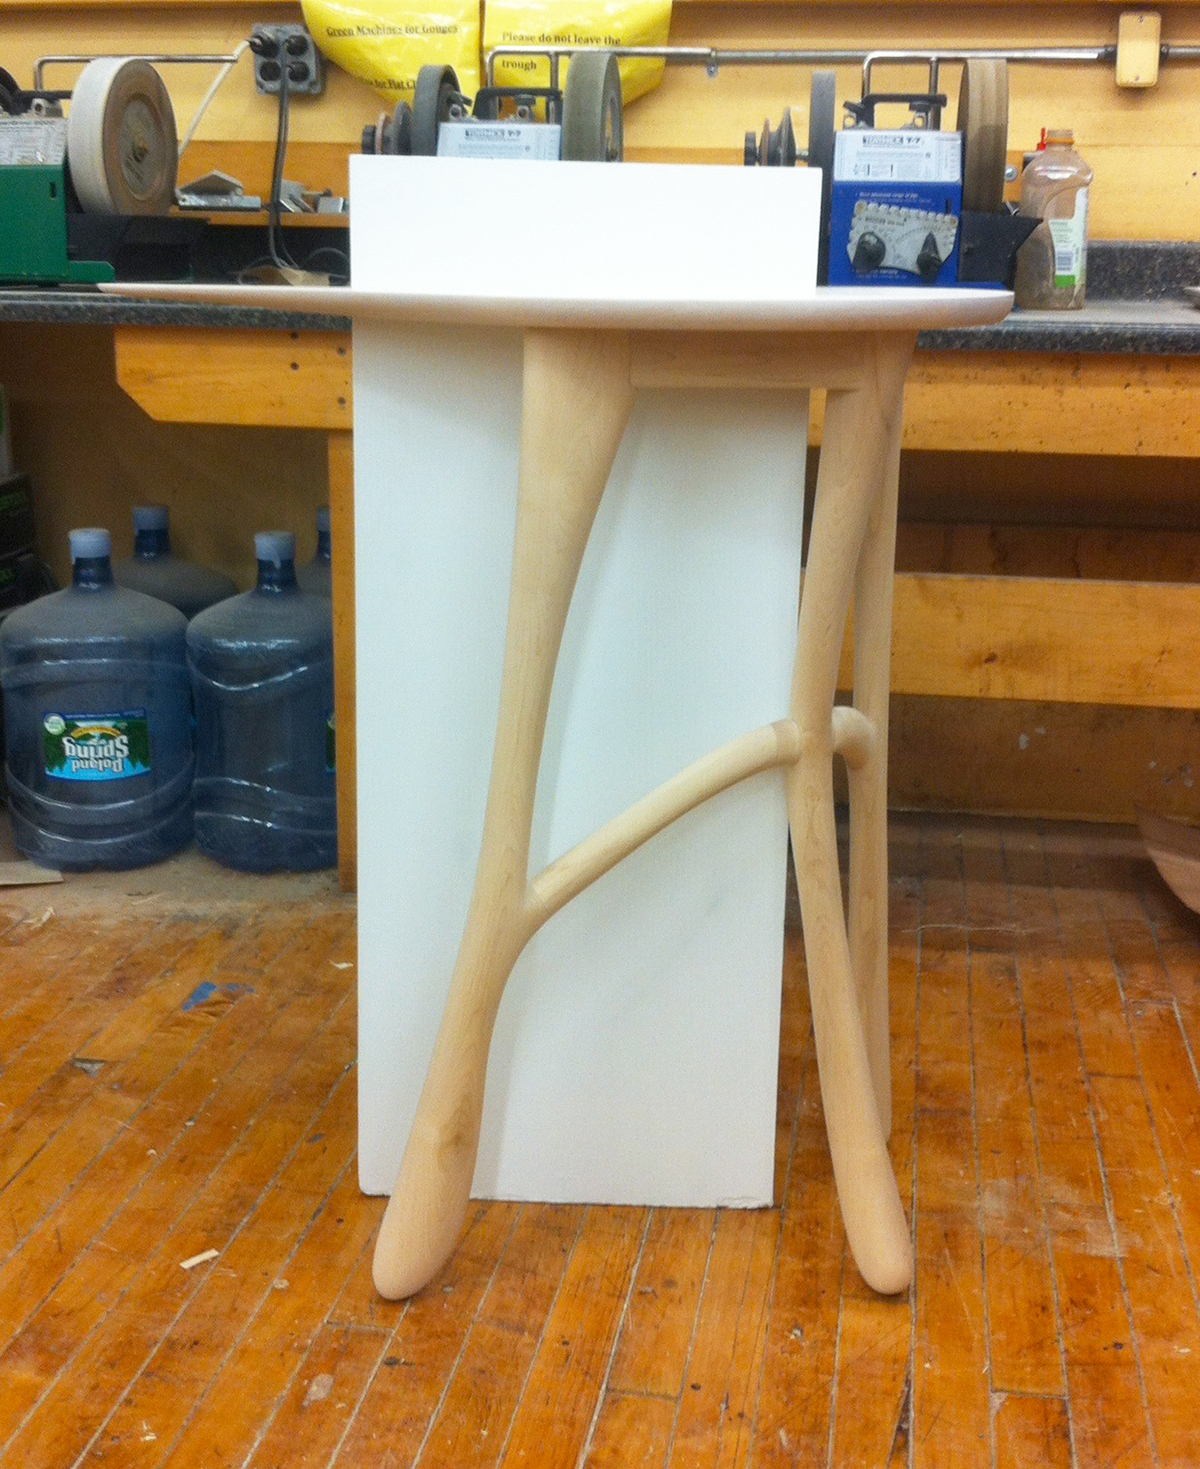 corner table table stool Claw Ball Feet bridge woodworking